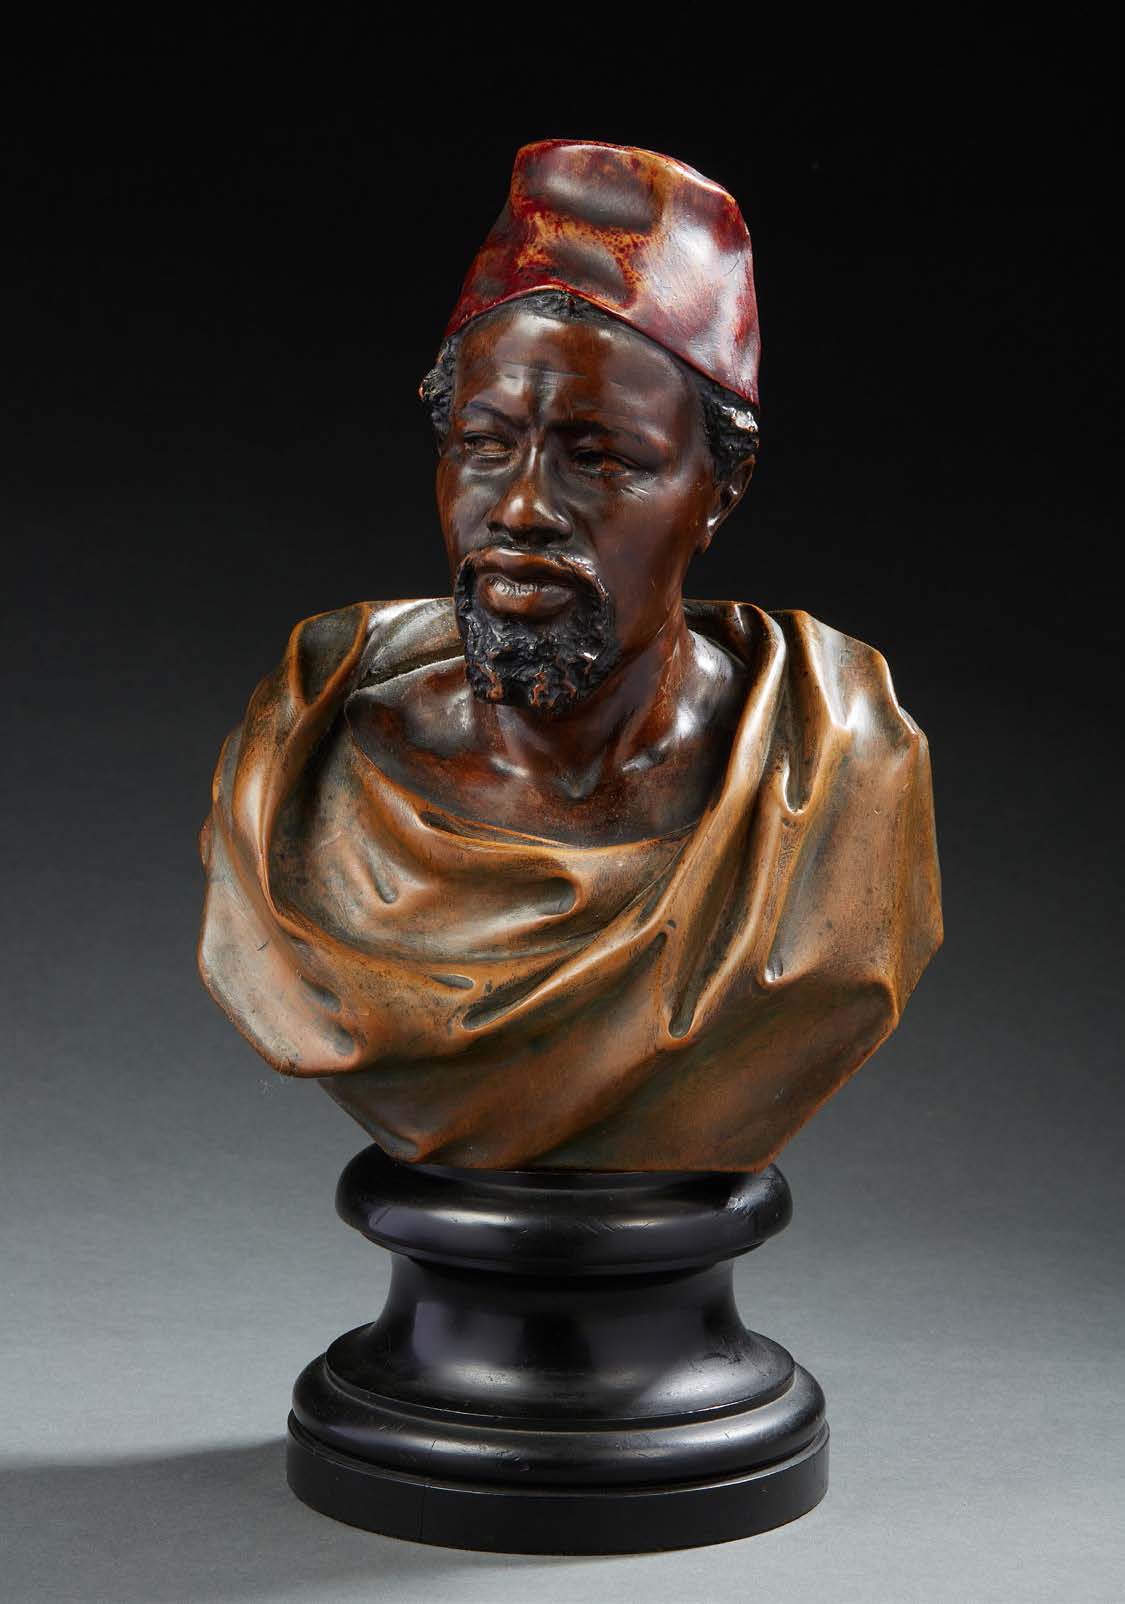 Null 一个圆形的木雕半身像，涂有 "自然 "漆，表现了一个非洲人向右看，戴着他的头发。
大约在1900年。
，它呈现在一个发黑的木头圆形模制基座上。
整体高&hellip;